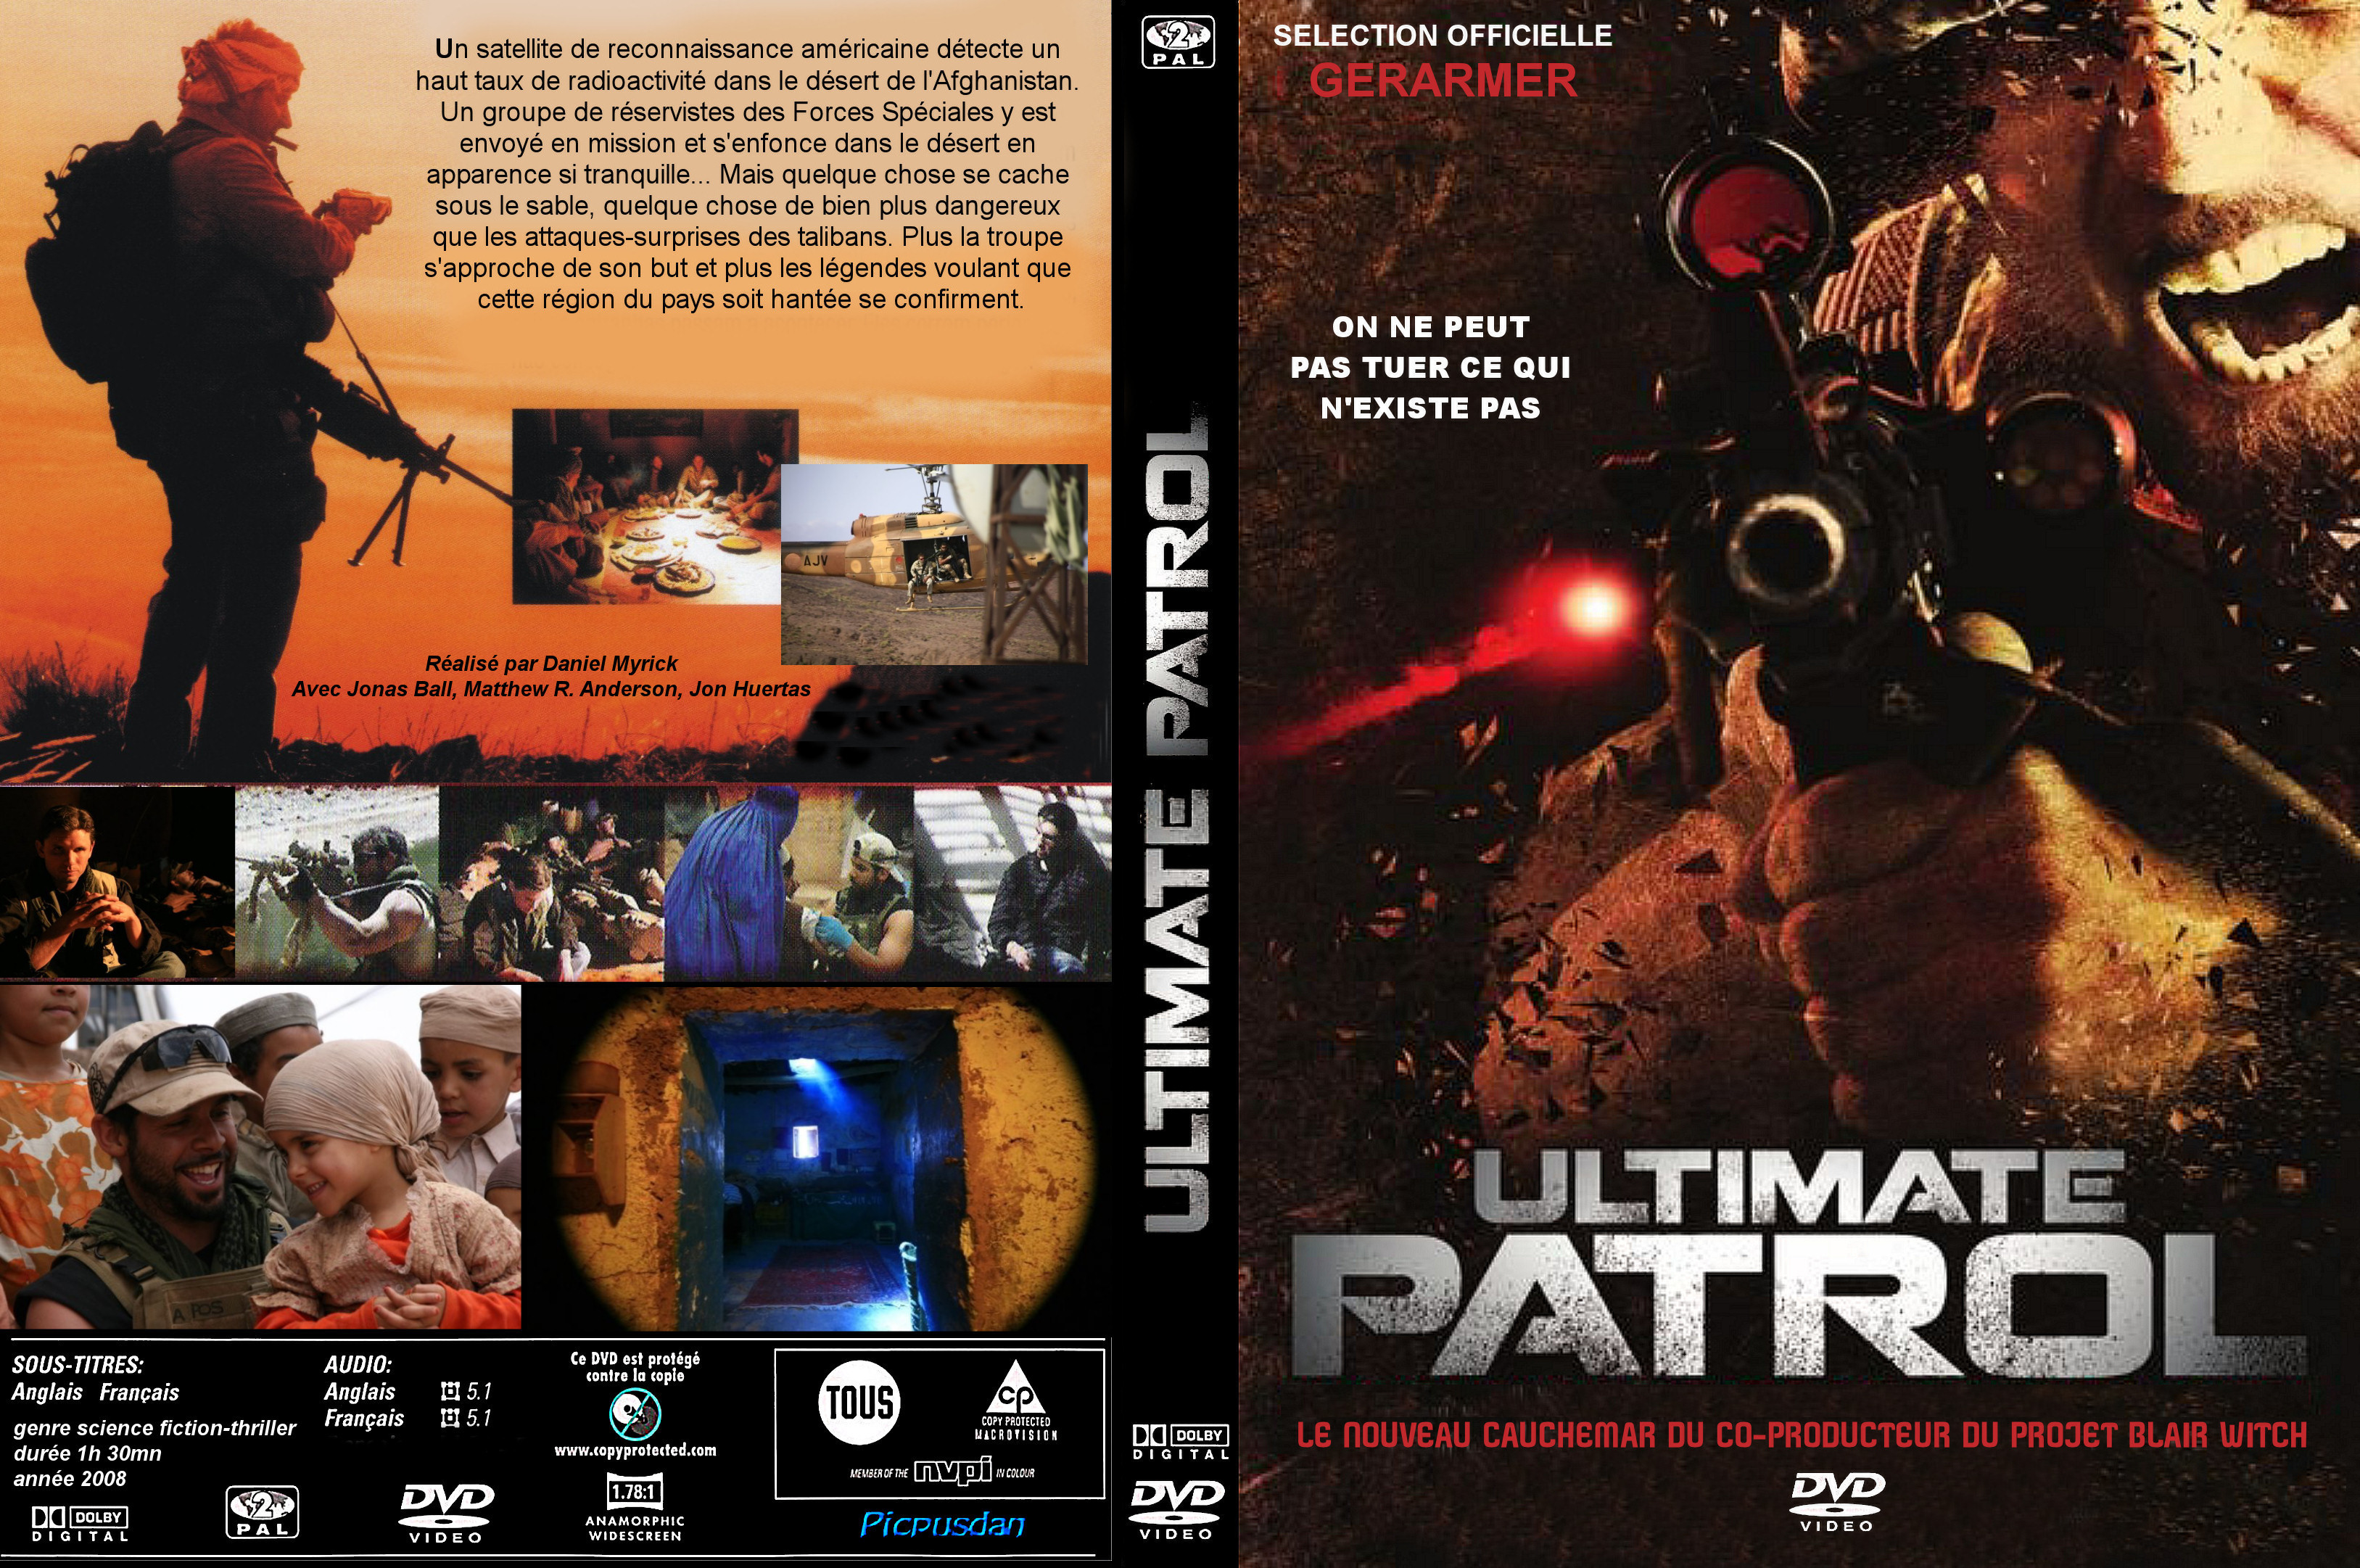 Jaquette DVD Ultimate patrol custom